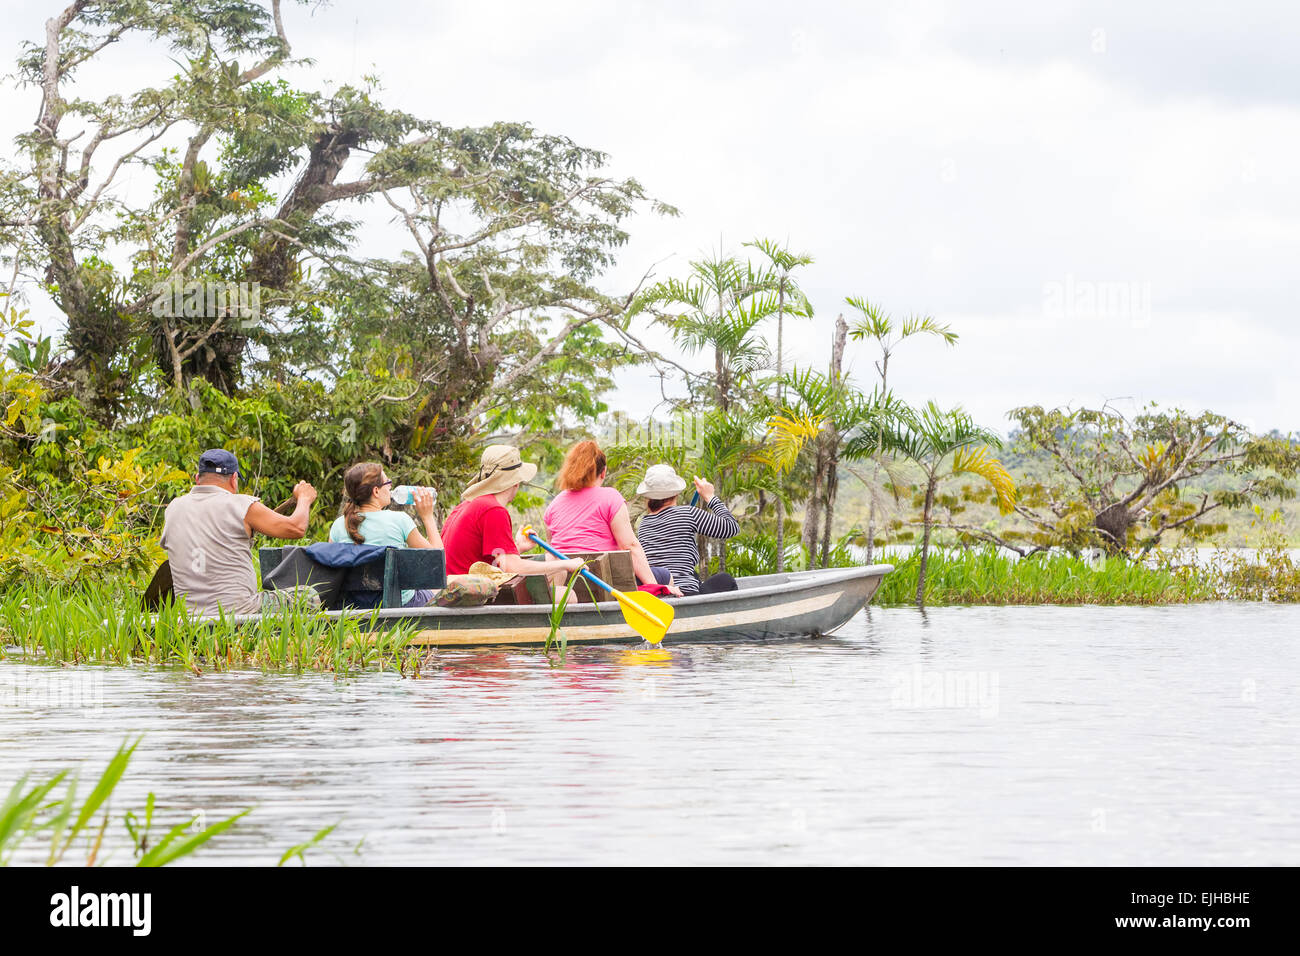 Tourists Fishing Legendary Piranha Fish In Ecuadorian Amazon Primary Jungle Stock Photo